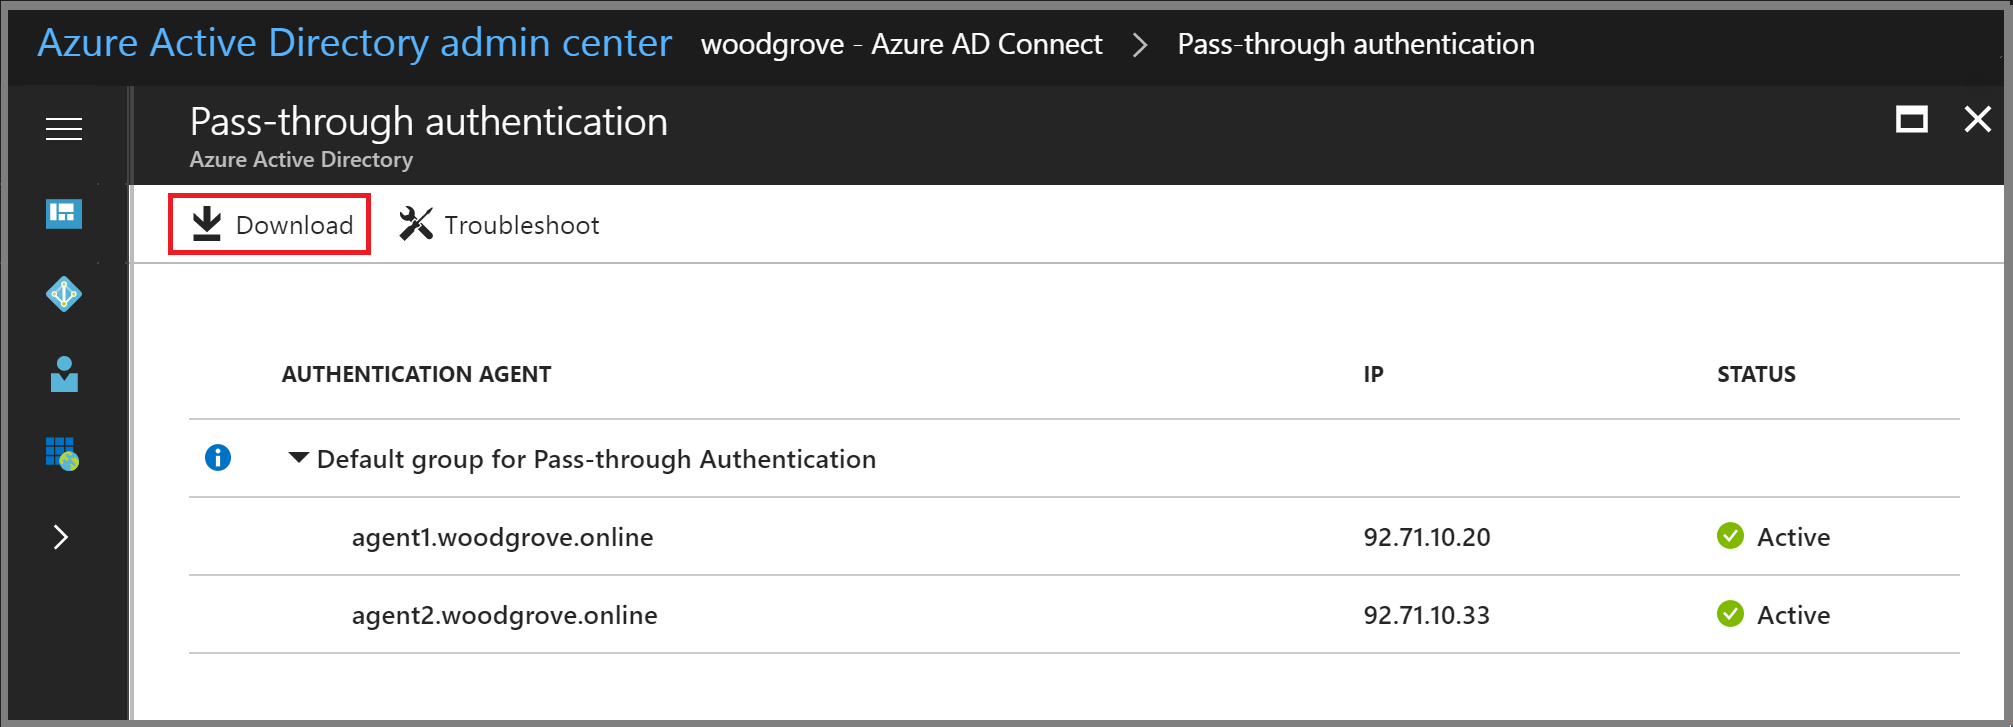 Azure Active Directory admin center: Download Authentication Agent button